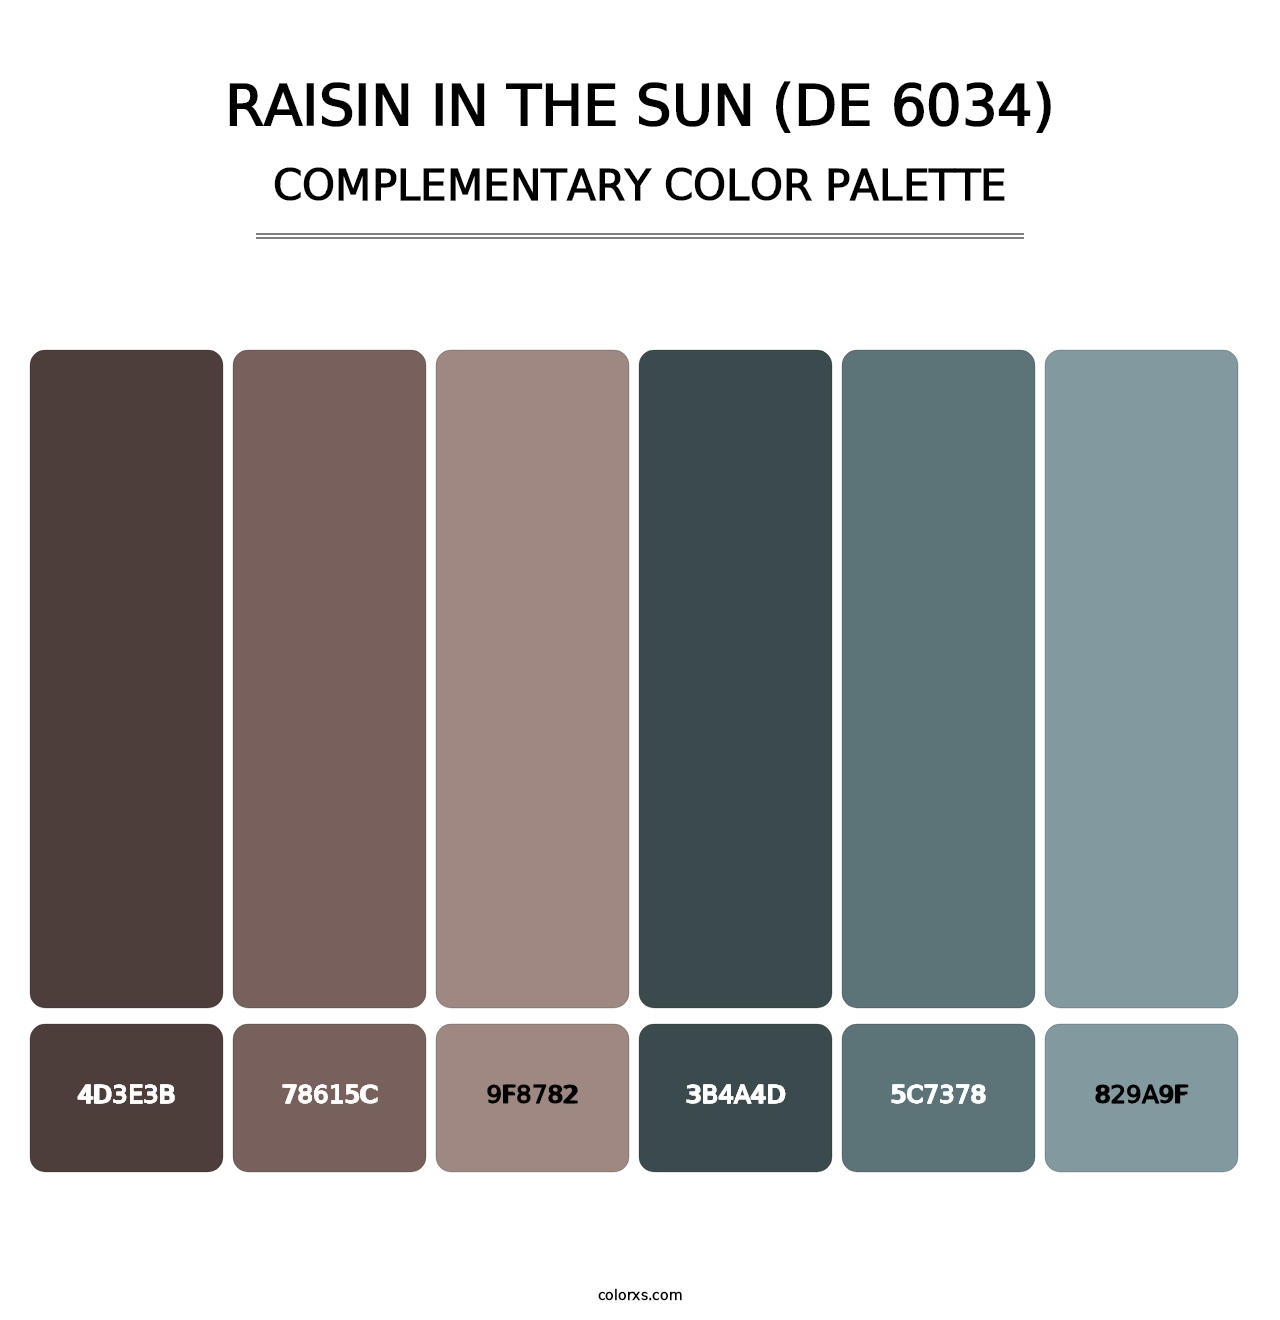 Raisin in the Sun (DE 6034) - Complementary Color Palette